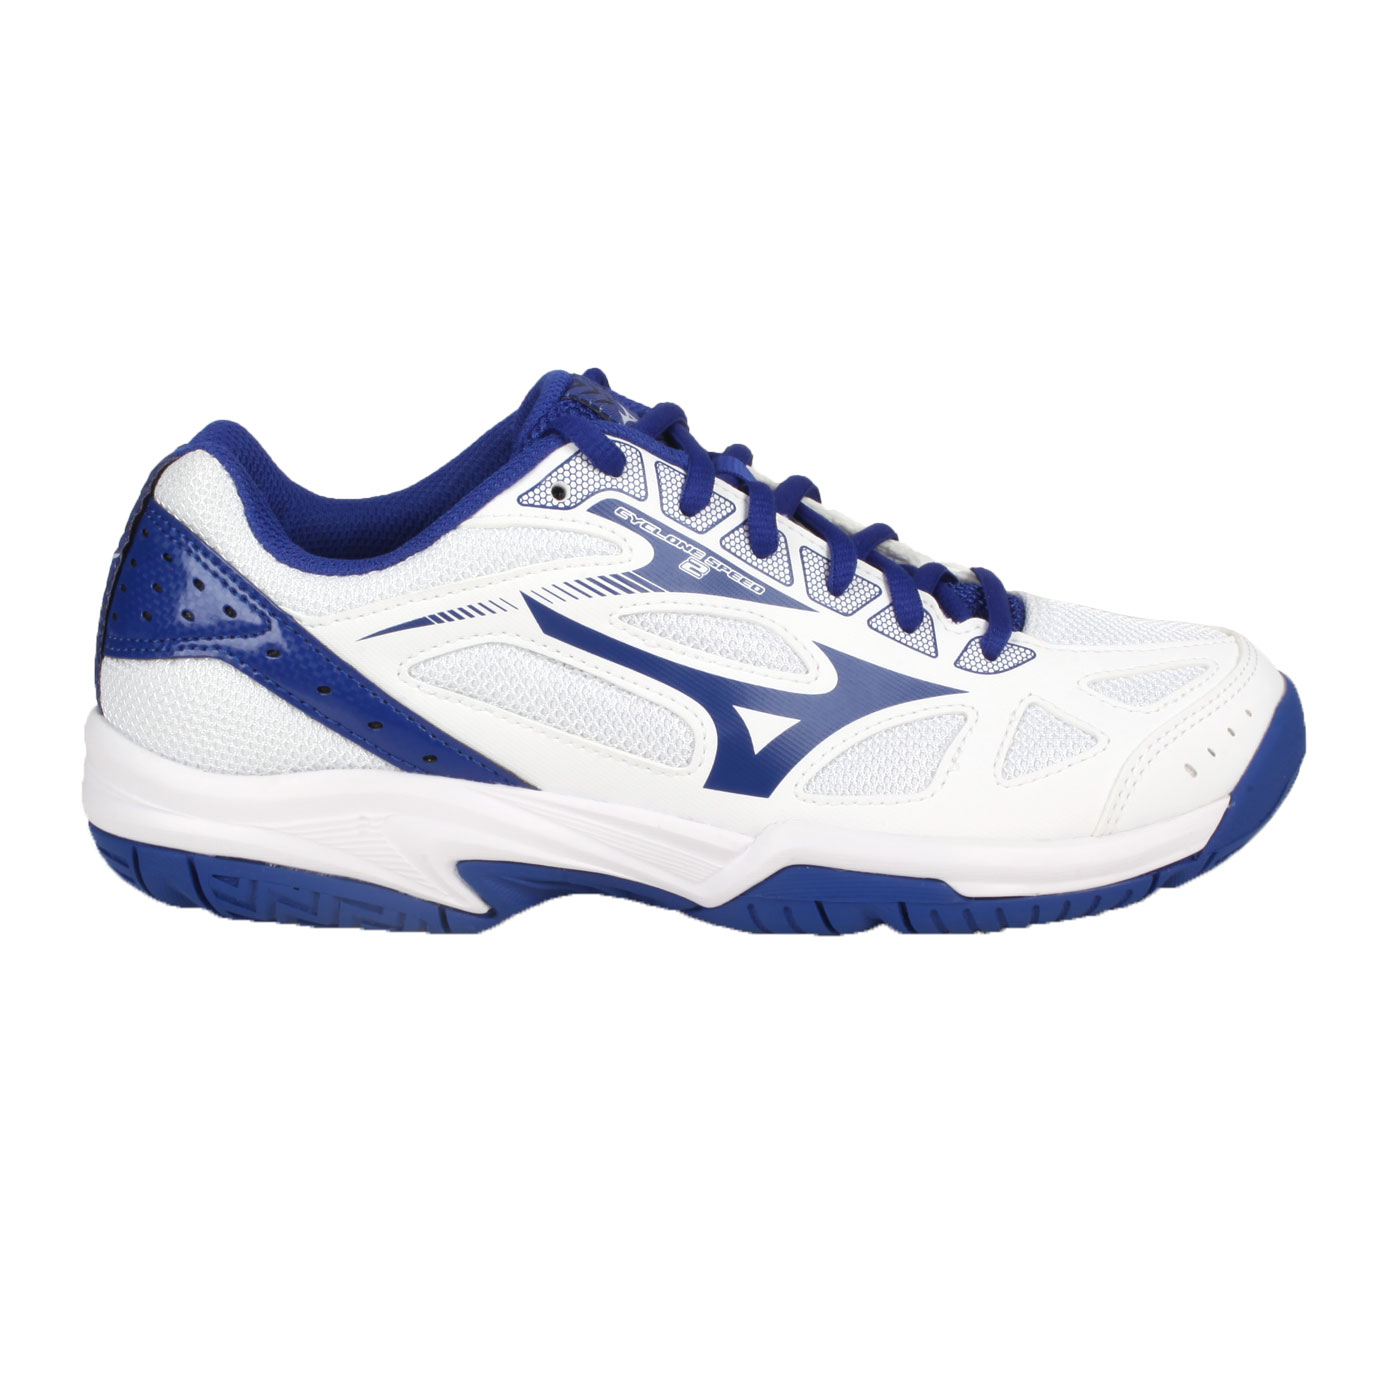 MIZUNO 排球鞋  @CYCLONE SPEED 2@V1GA198002 - 白白藍